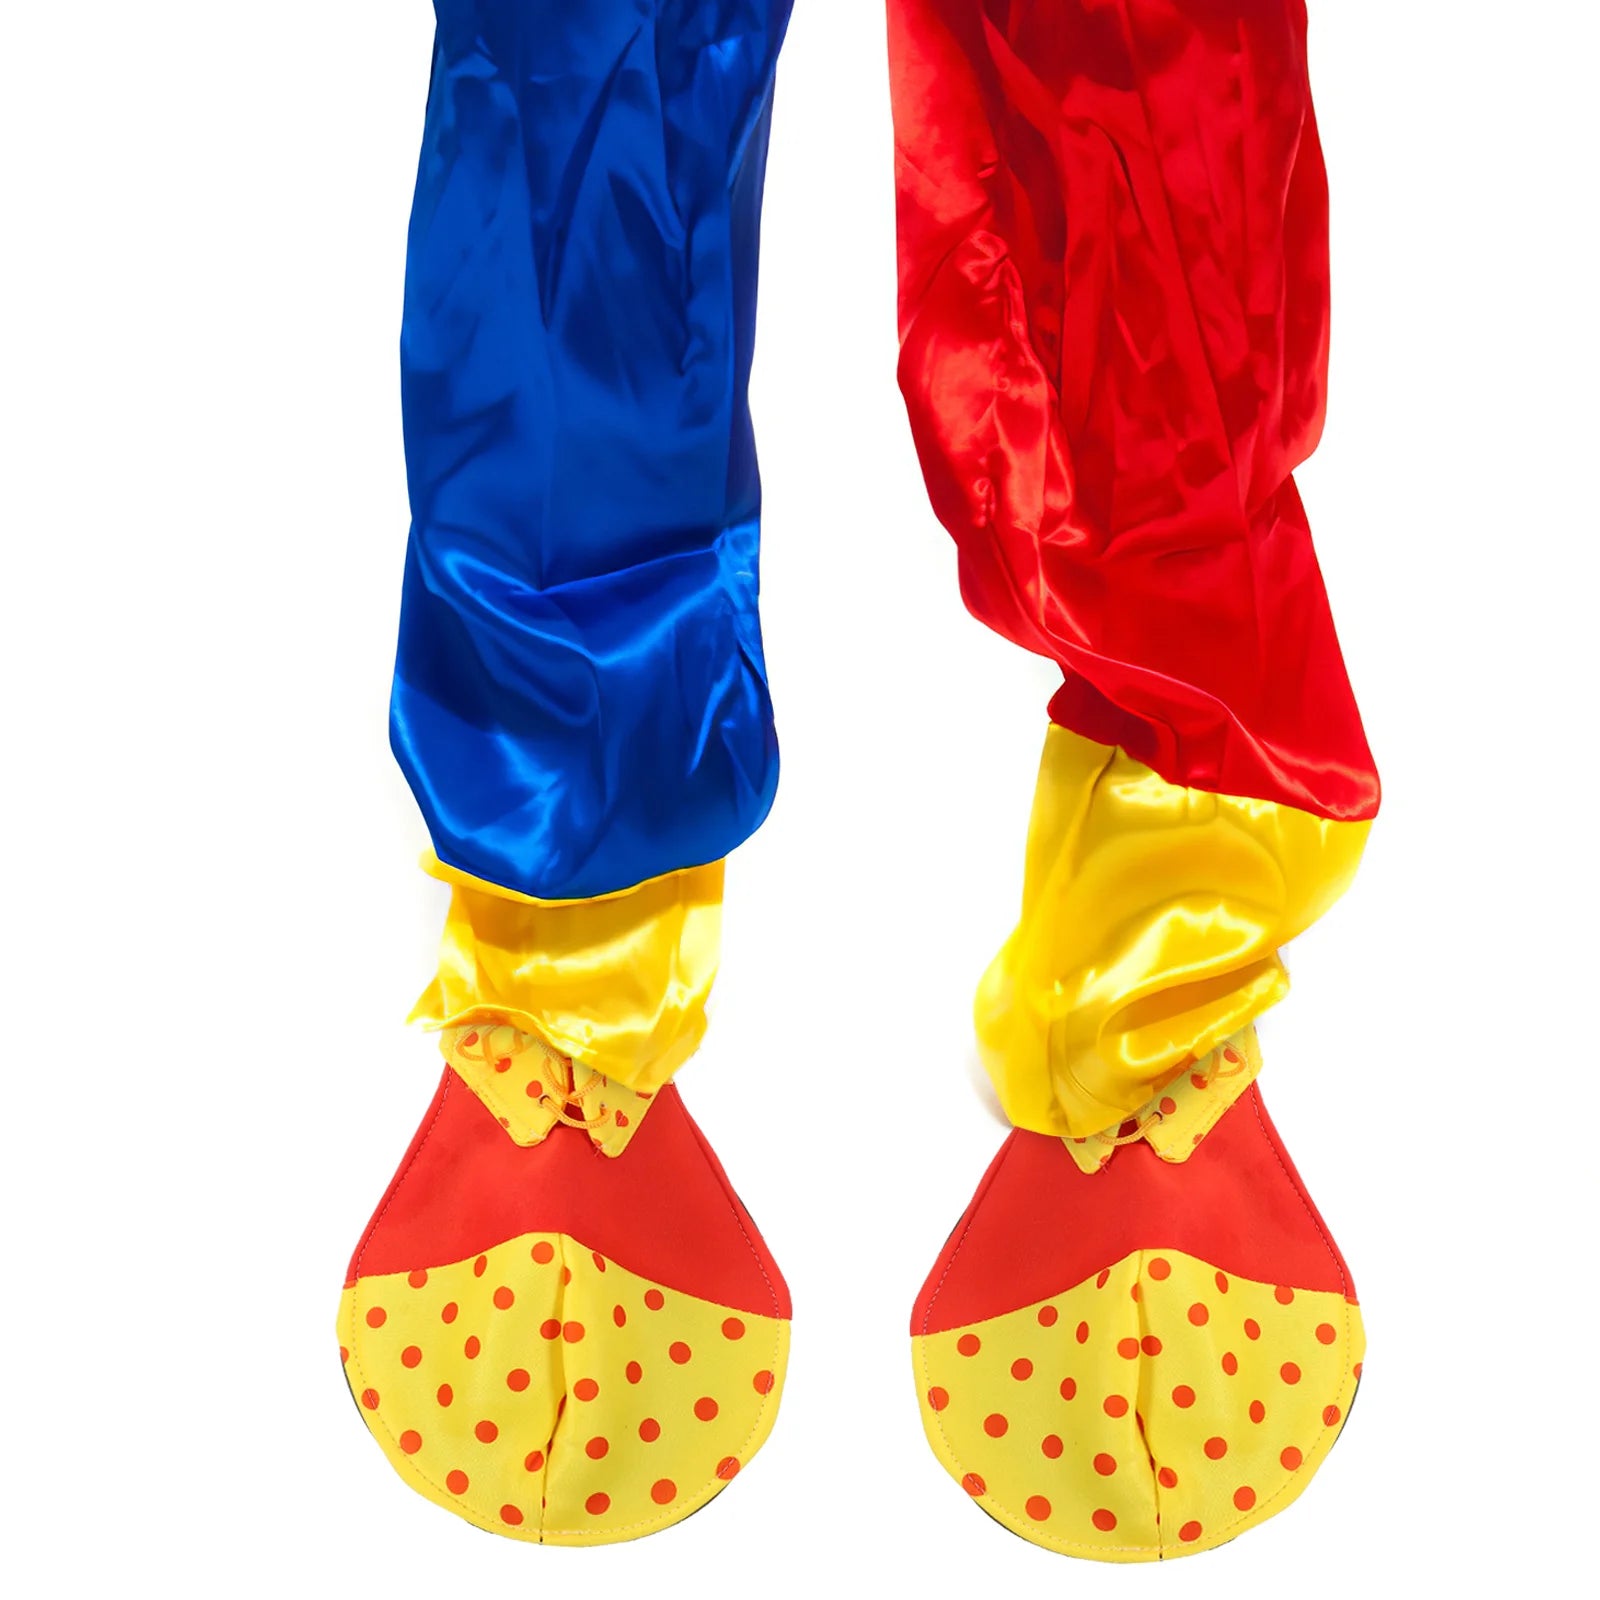 Large Clown Shoes Dot Halloween Costume Clown Shoes Clown Dress Up Adult Shoes Party Decorations For Women Men (One Size)